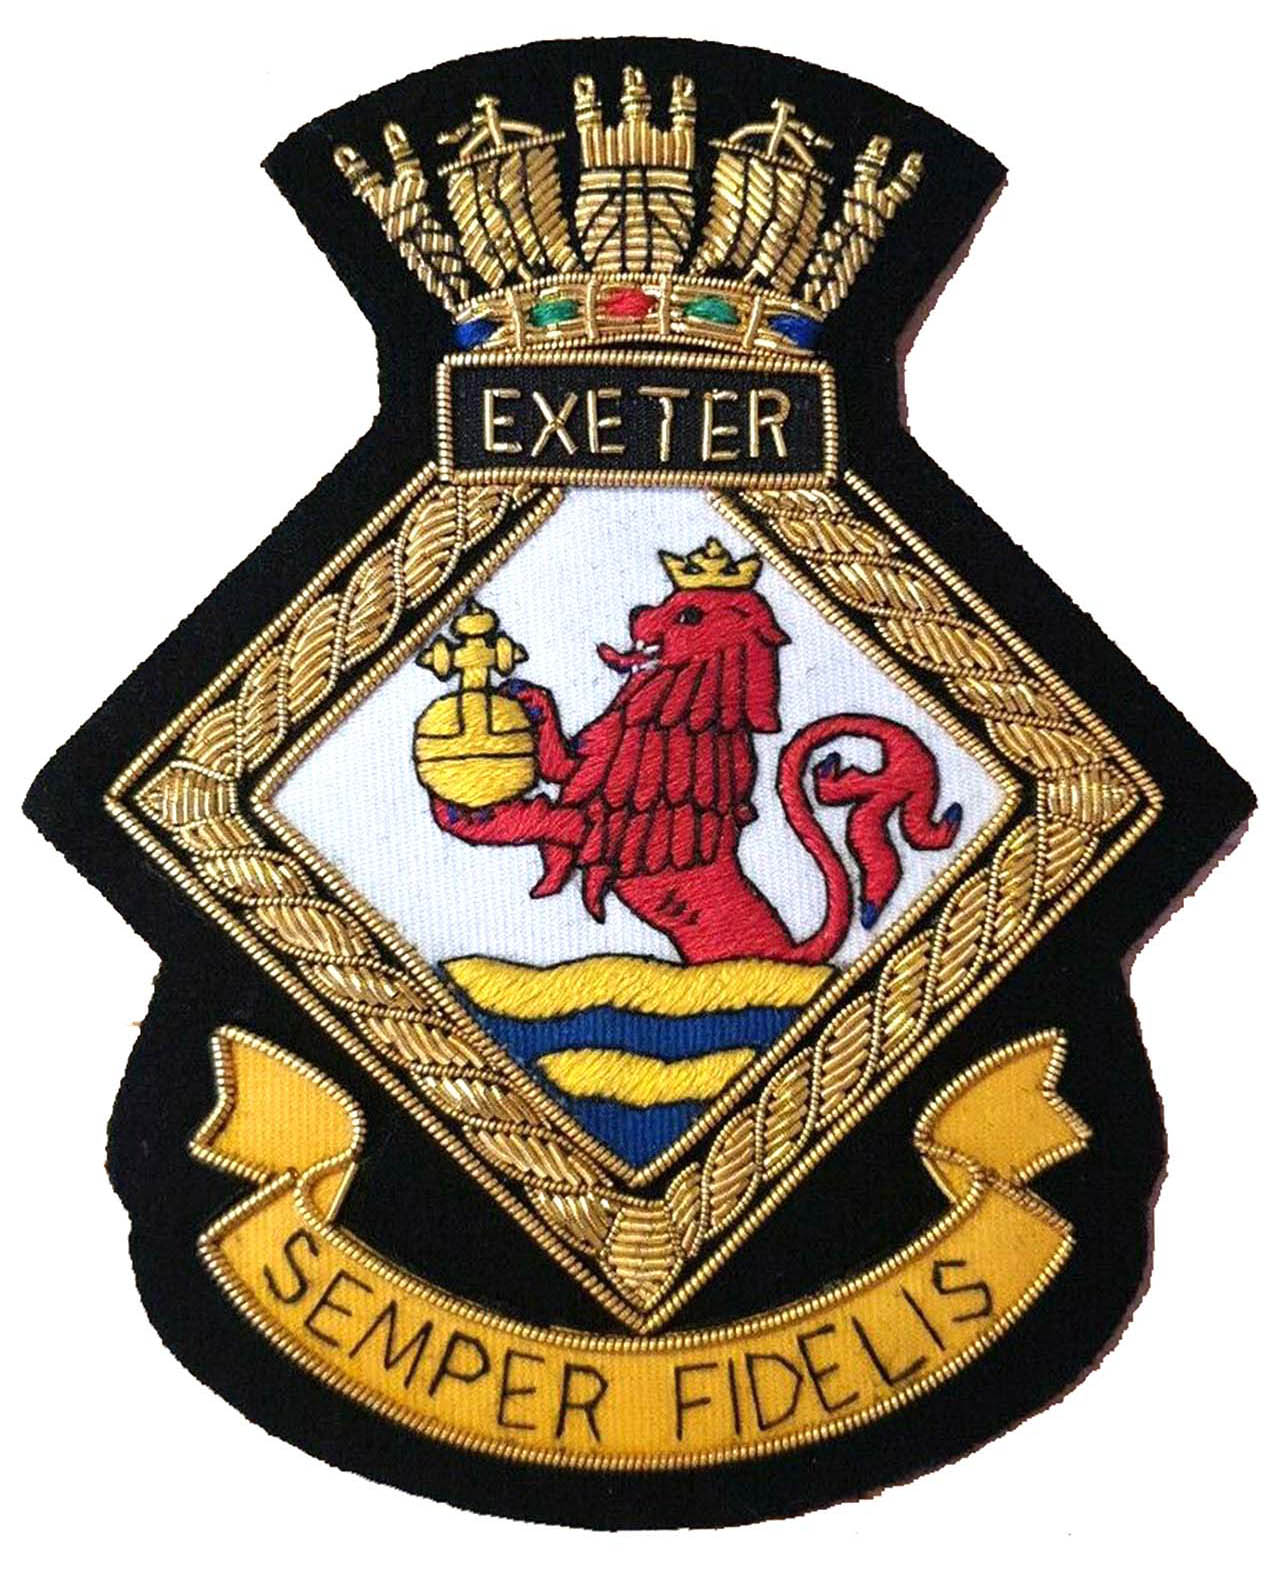 HMS Exeter crest